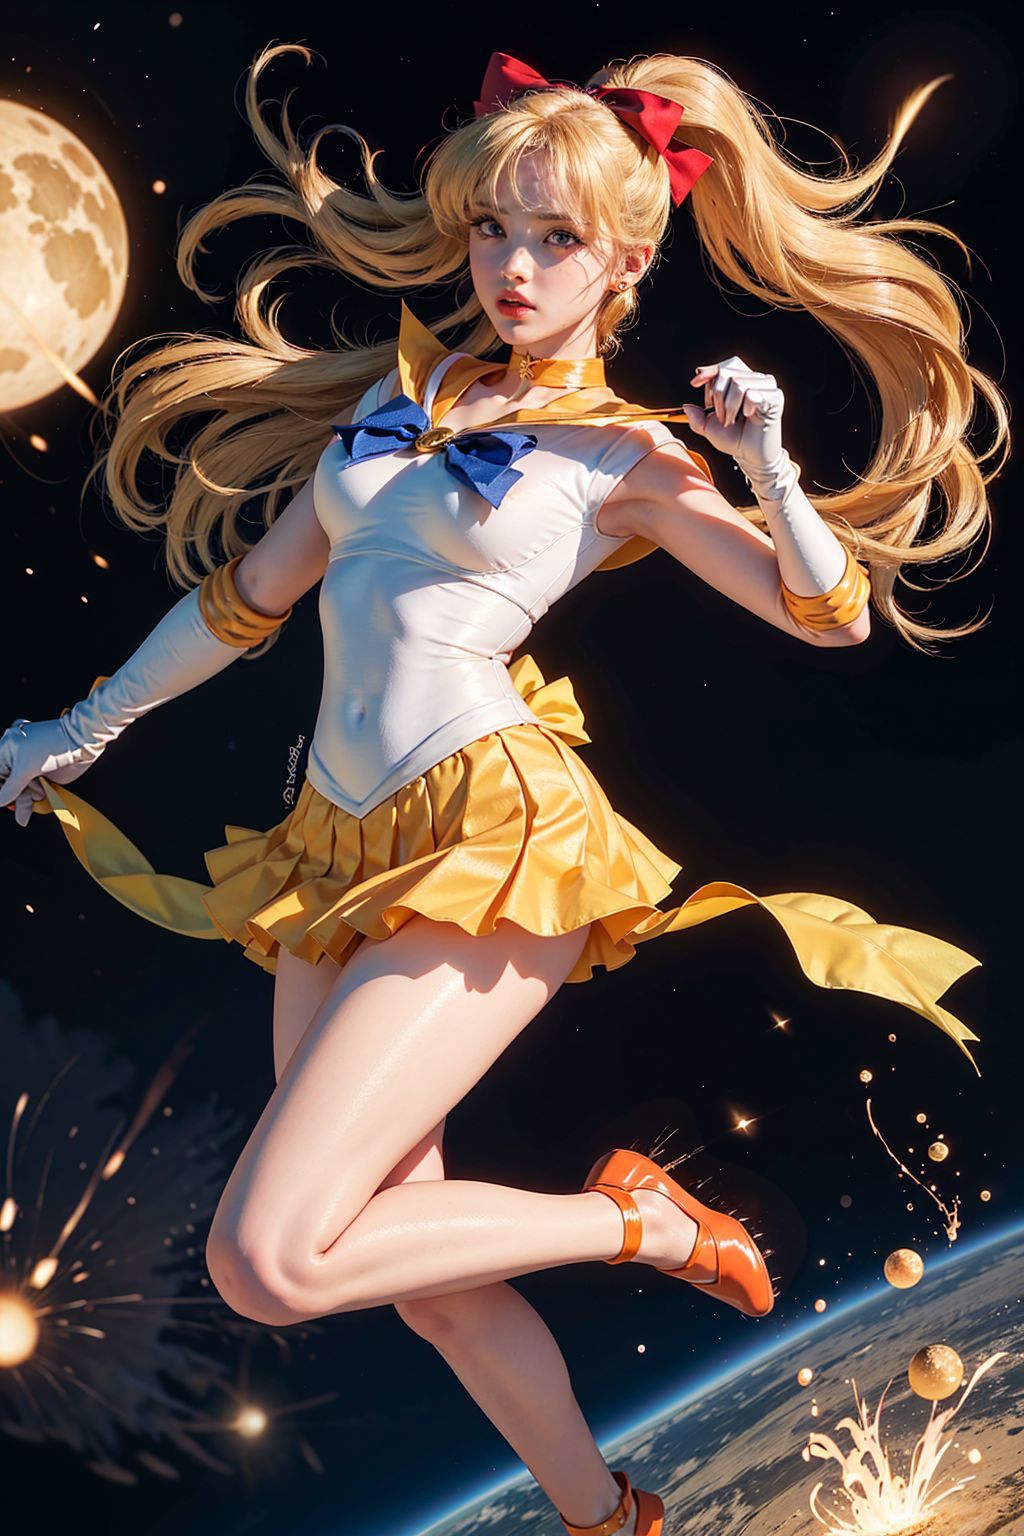 Sailor Venus セーラーヴィーナス / Sailor Moon image by do14